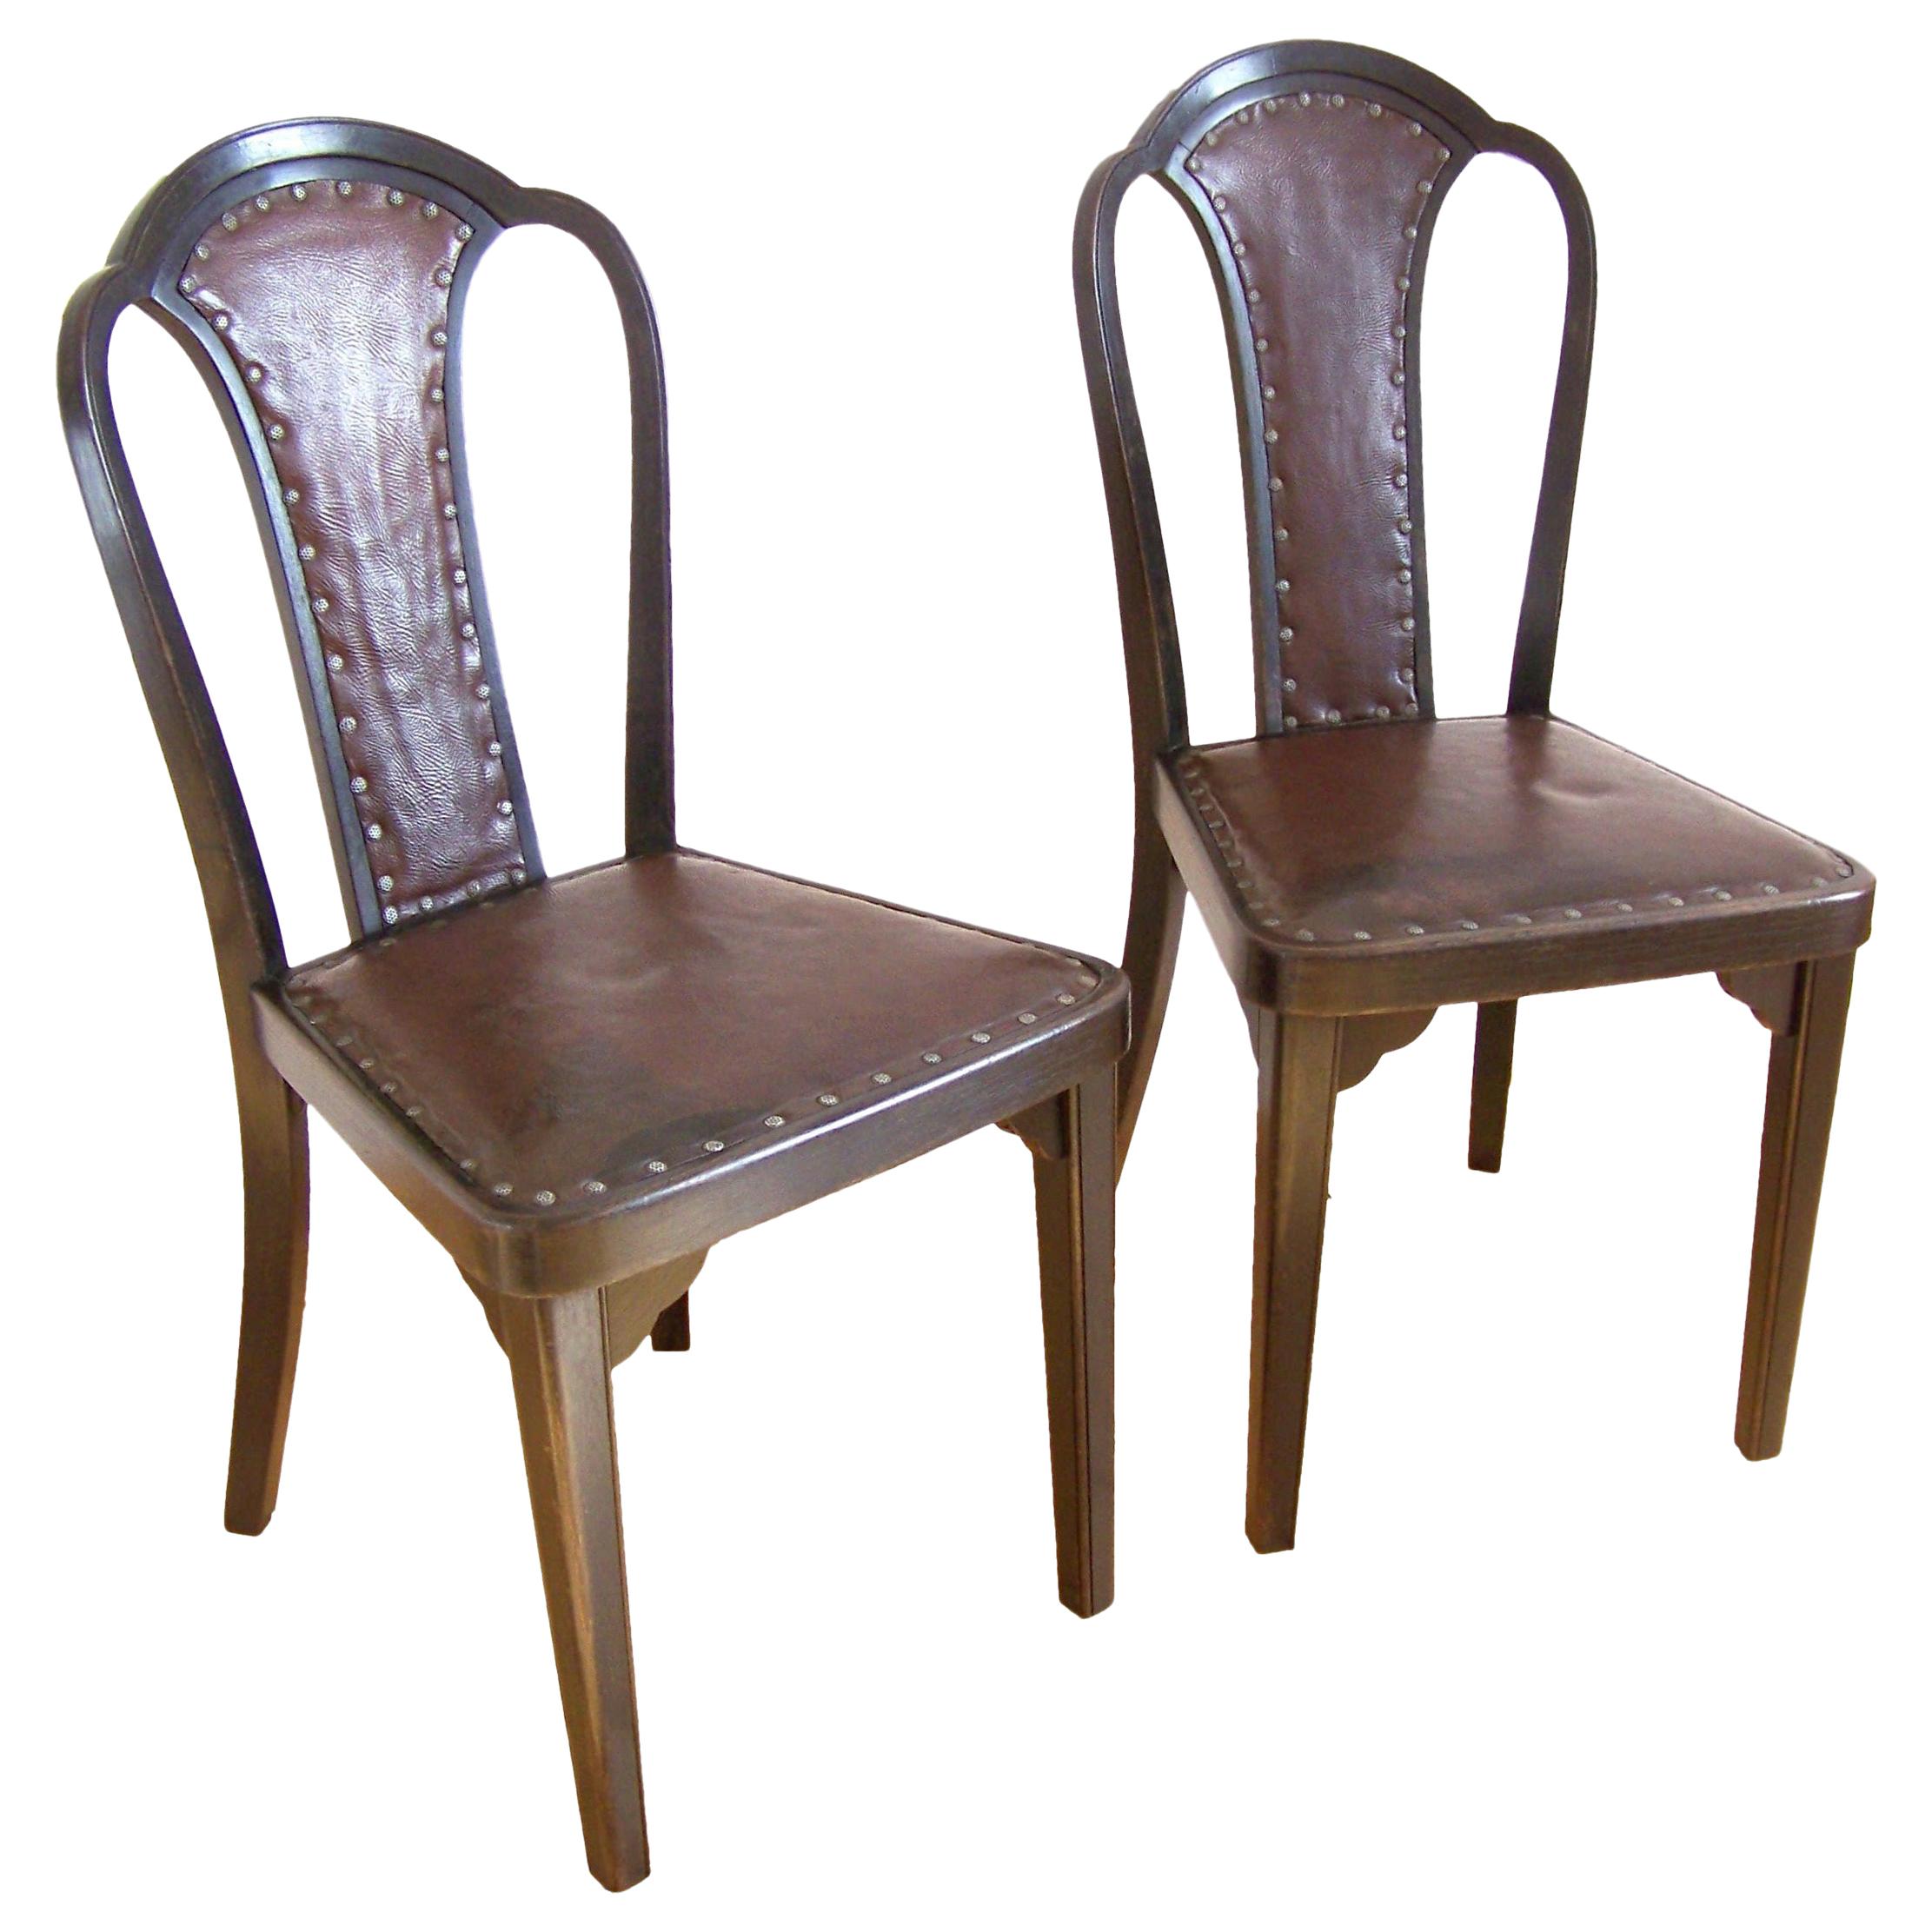 Two Thonet Chair Nr.918, Gustav Siegel in 1928